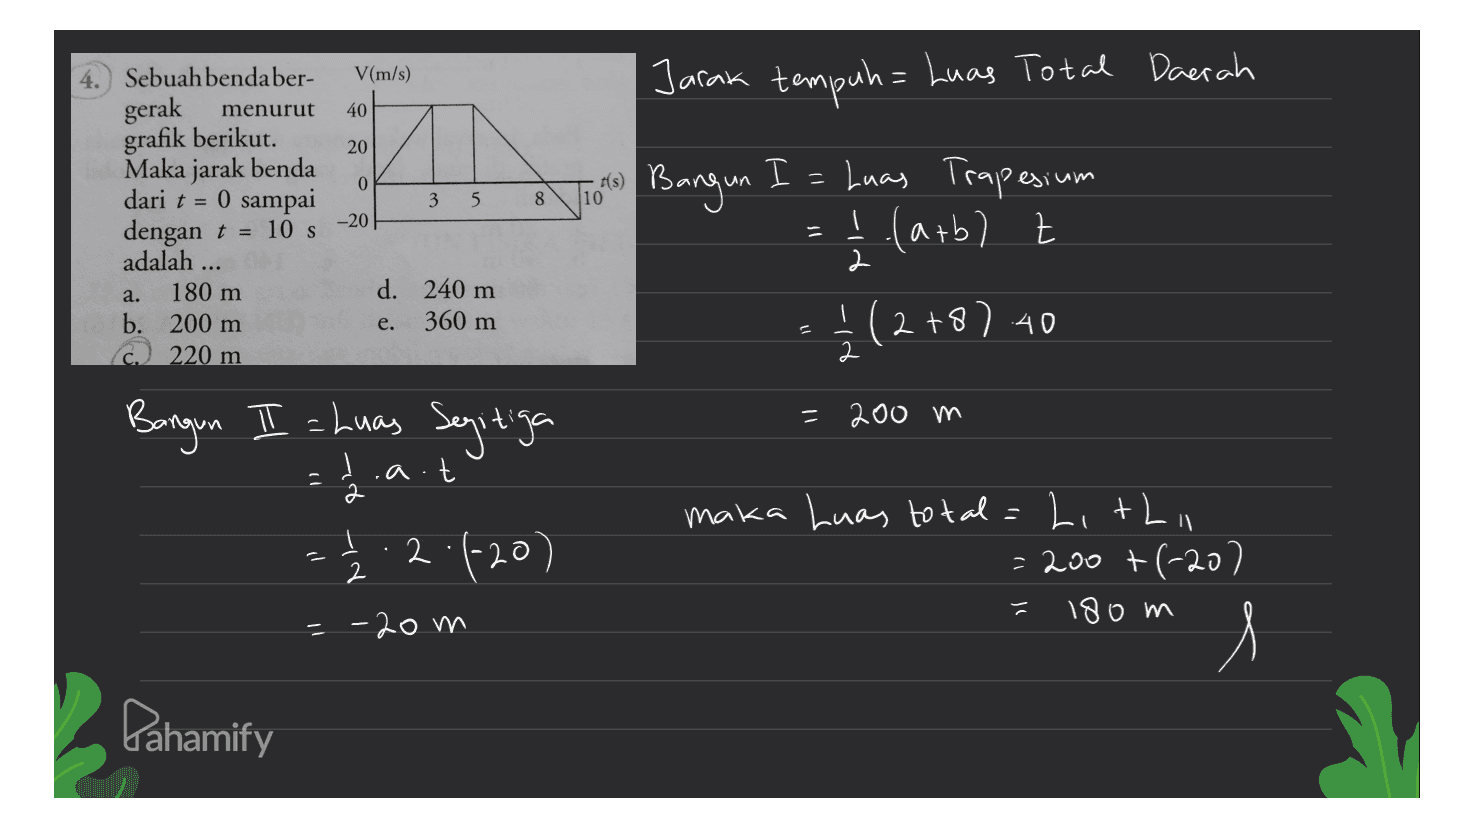 V(m/s) Jarak tempuh= Luas Total Daerah gerak 40 20 0 3 5 8 10 Sebuah bendaber- menurut grafik berikut. Maka jarak benda dari t = 0 sampai dengan t = 10 s adalah 180 m b. 200 m C 220 m -20 2 a. d. 240 m e. 360 m 2 si Bangun I = Luas Trapesium =ļ (arbl t Z - 4 (2+8) 41 Bangun II = Luas Segitiga 2.a.t maka Luas total=Lithi 1.2.4-20) = 200 +(-20) 180 m = 200 m d תן 2 느 --20m Pahamify 